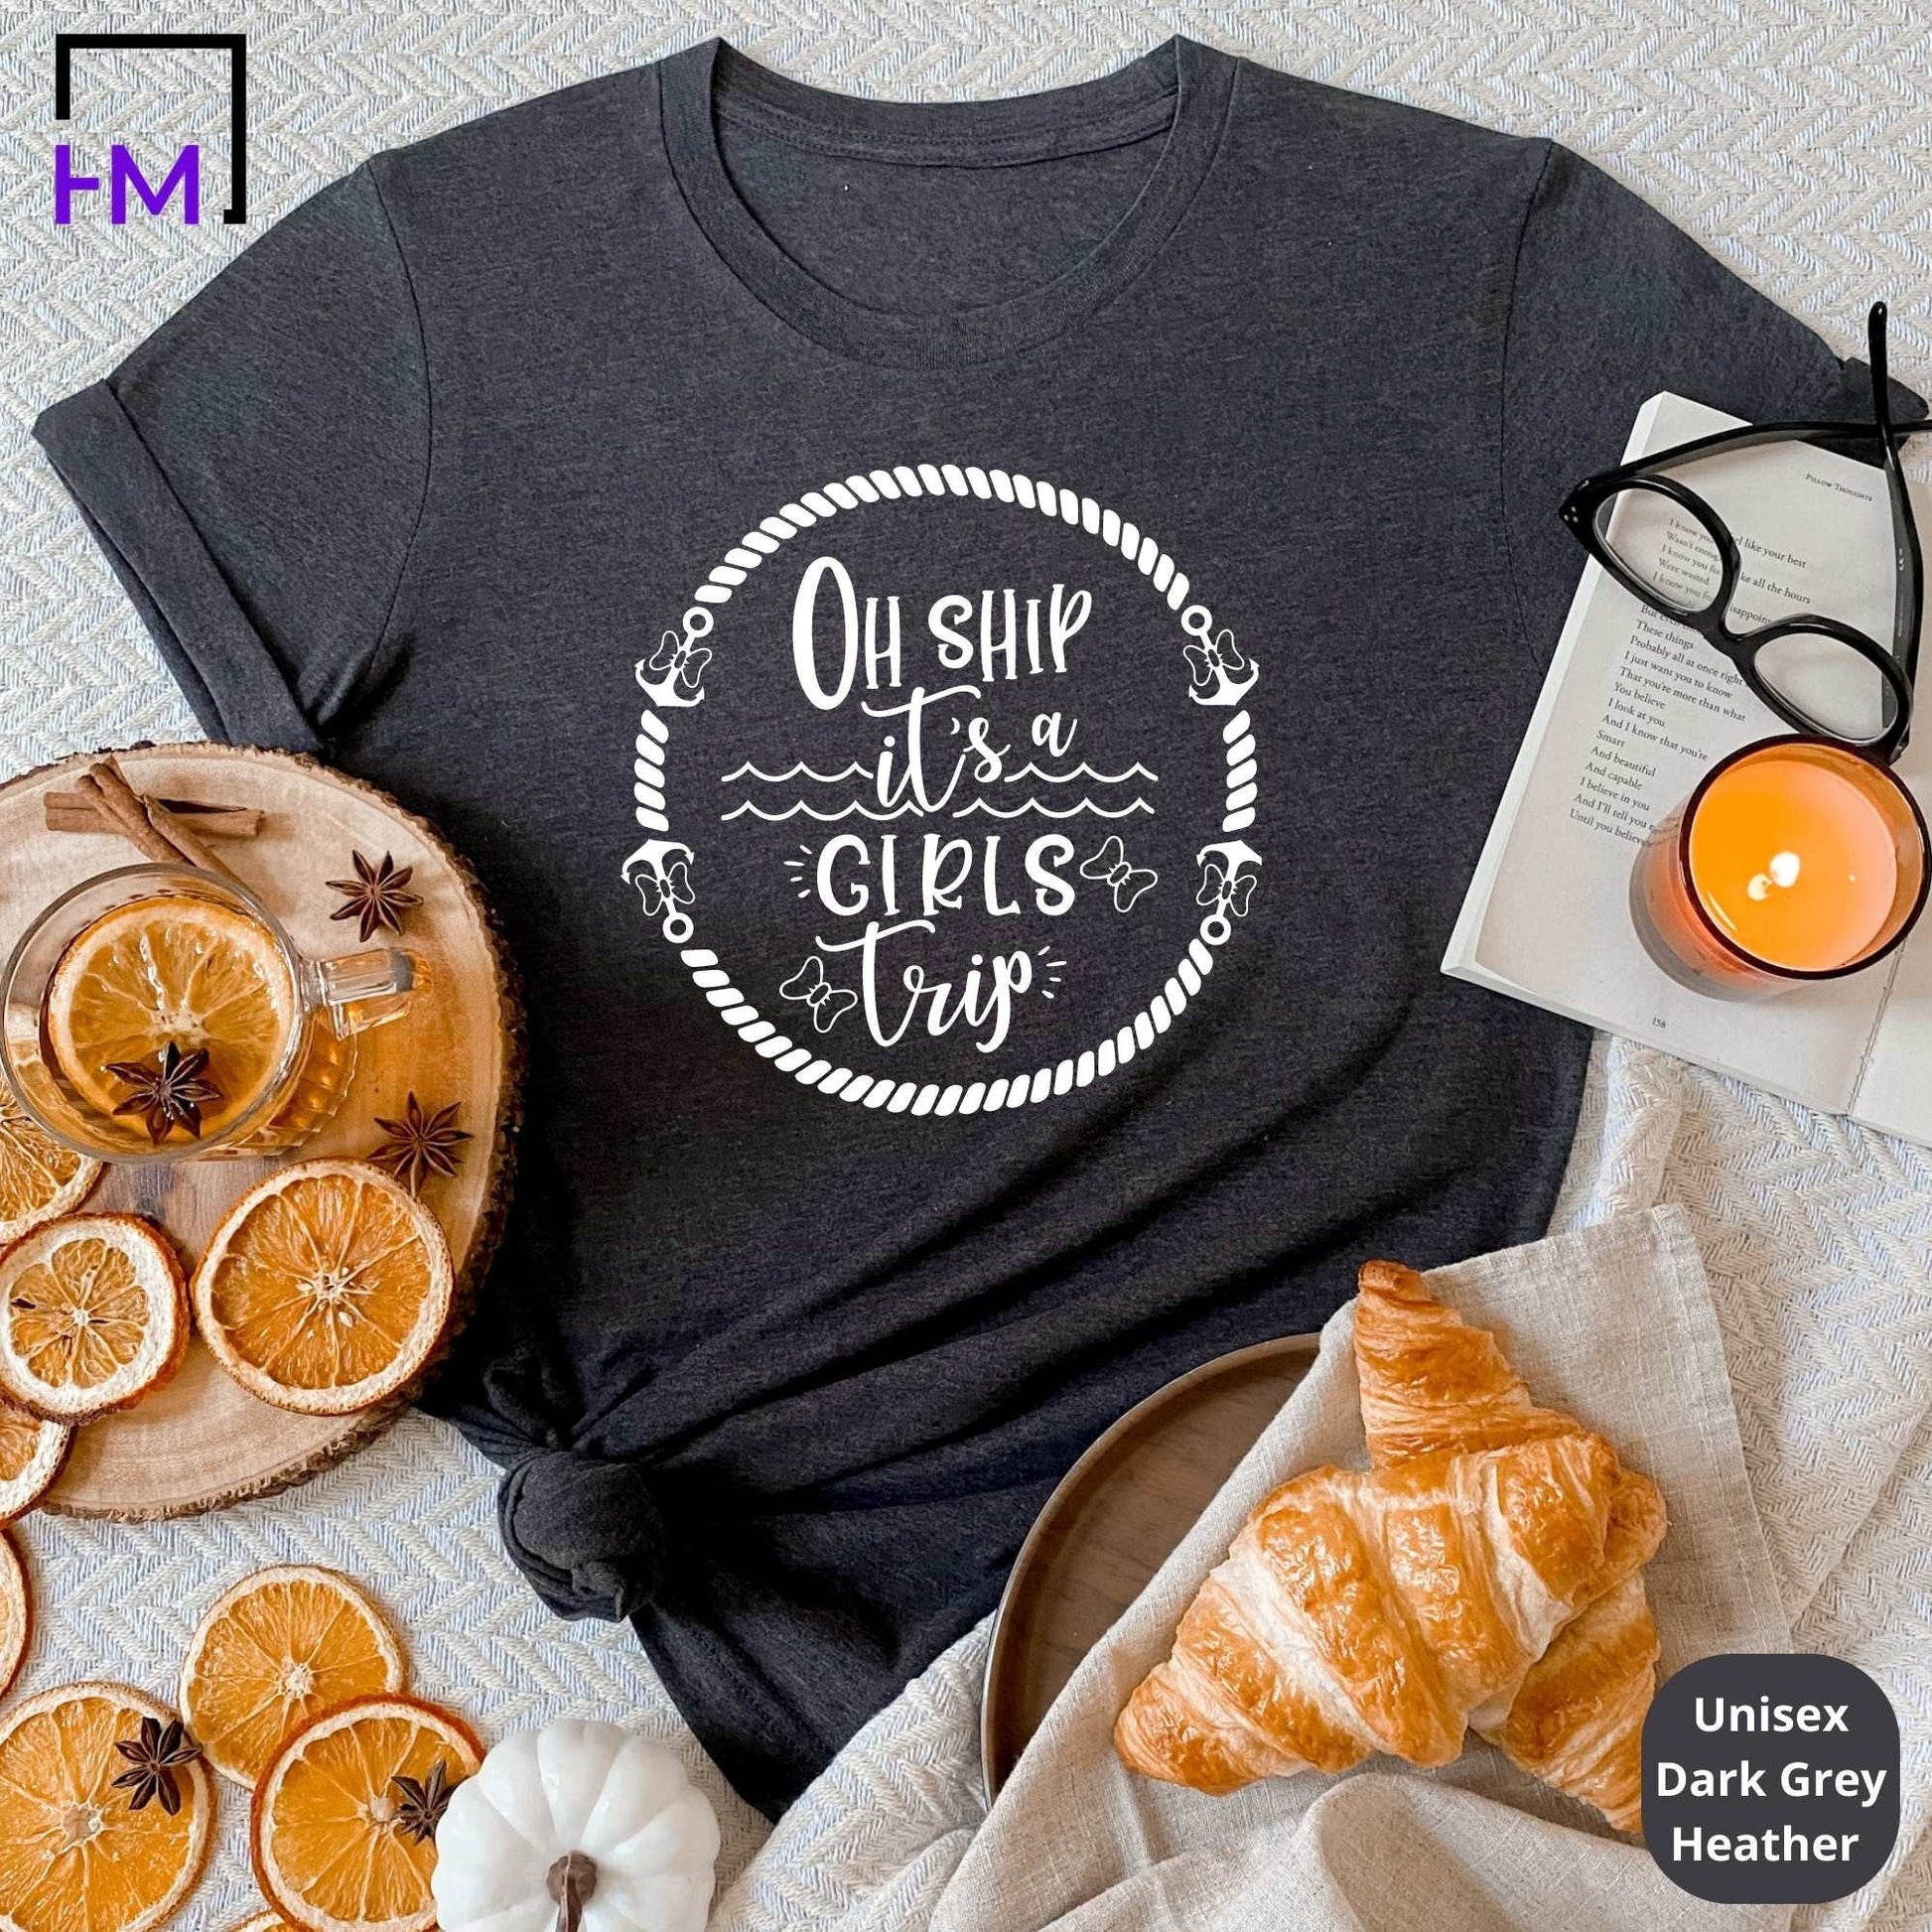 Oh Ship It's A Girls Trip, Tank Top & T-Shirt